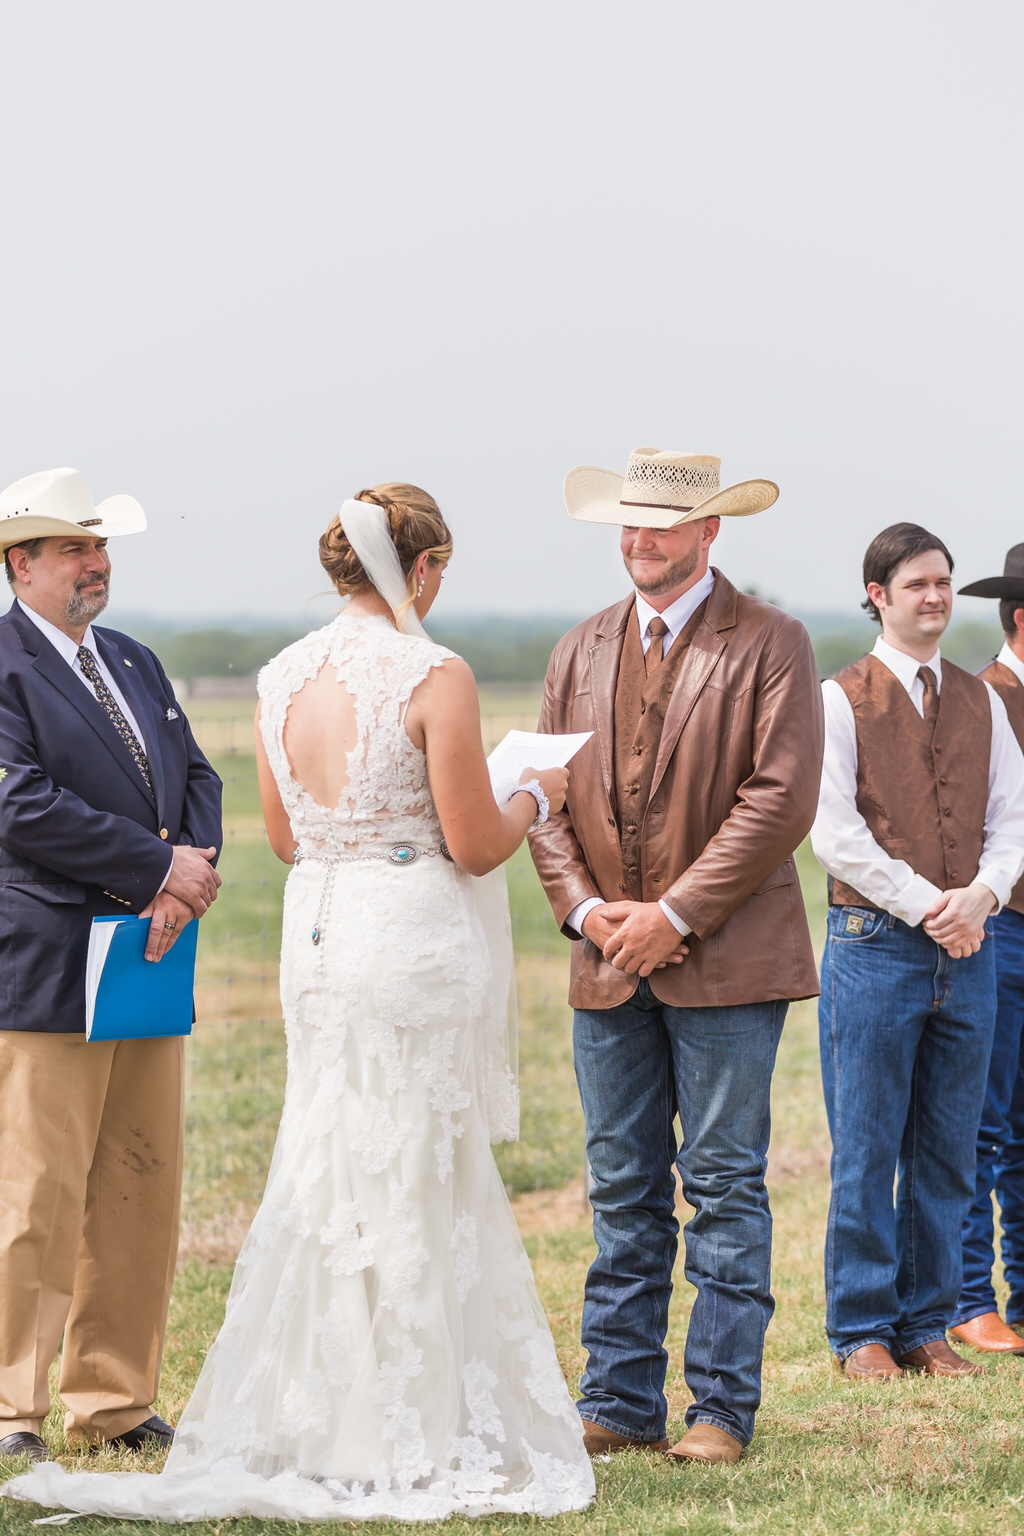 Country Wedding in Seguin, TX by Dawn Elizabeth Studios, San Antonio Wedding Photographer